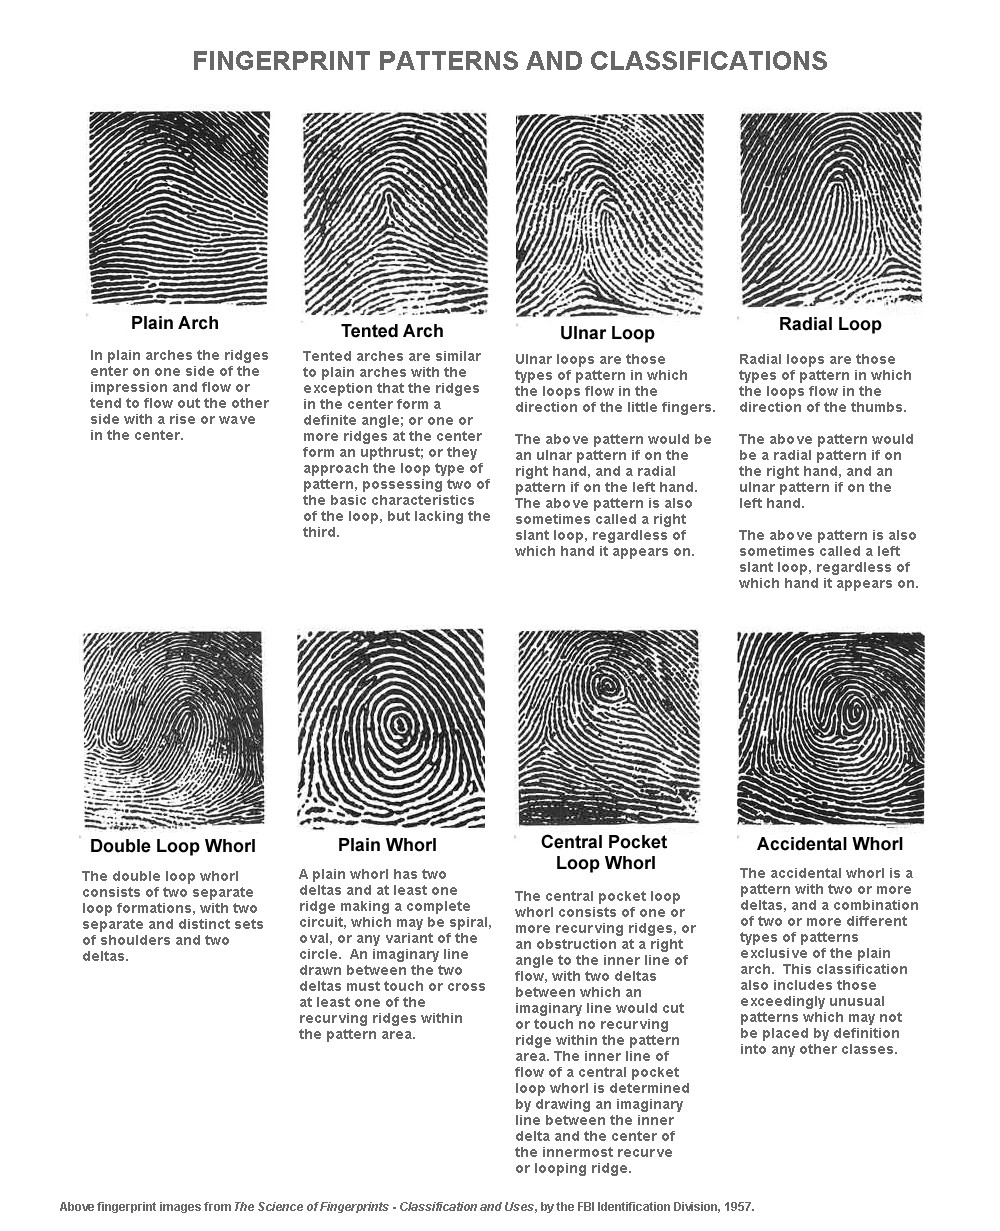 The FBI discriminates 8 fingerprint types.